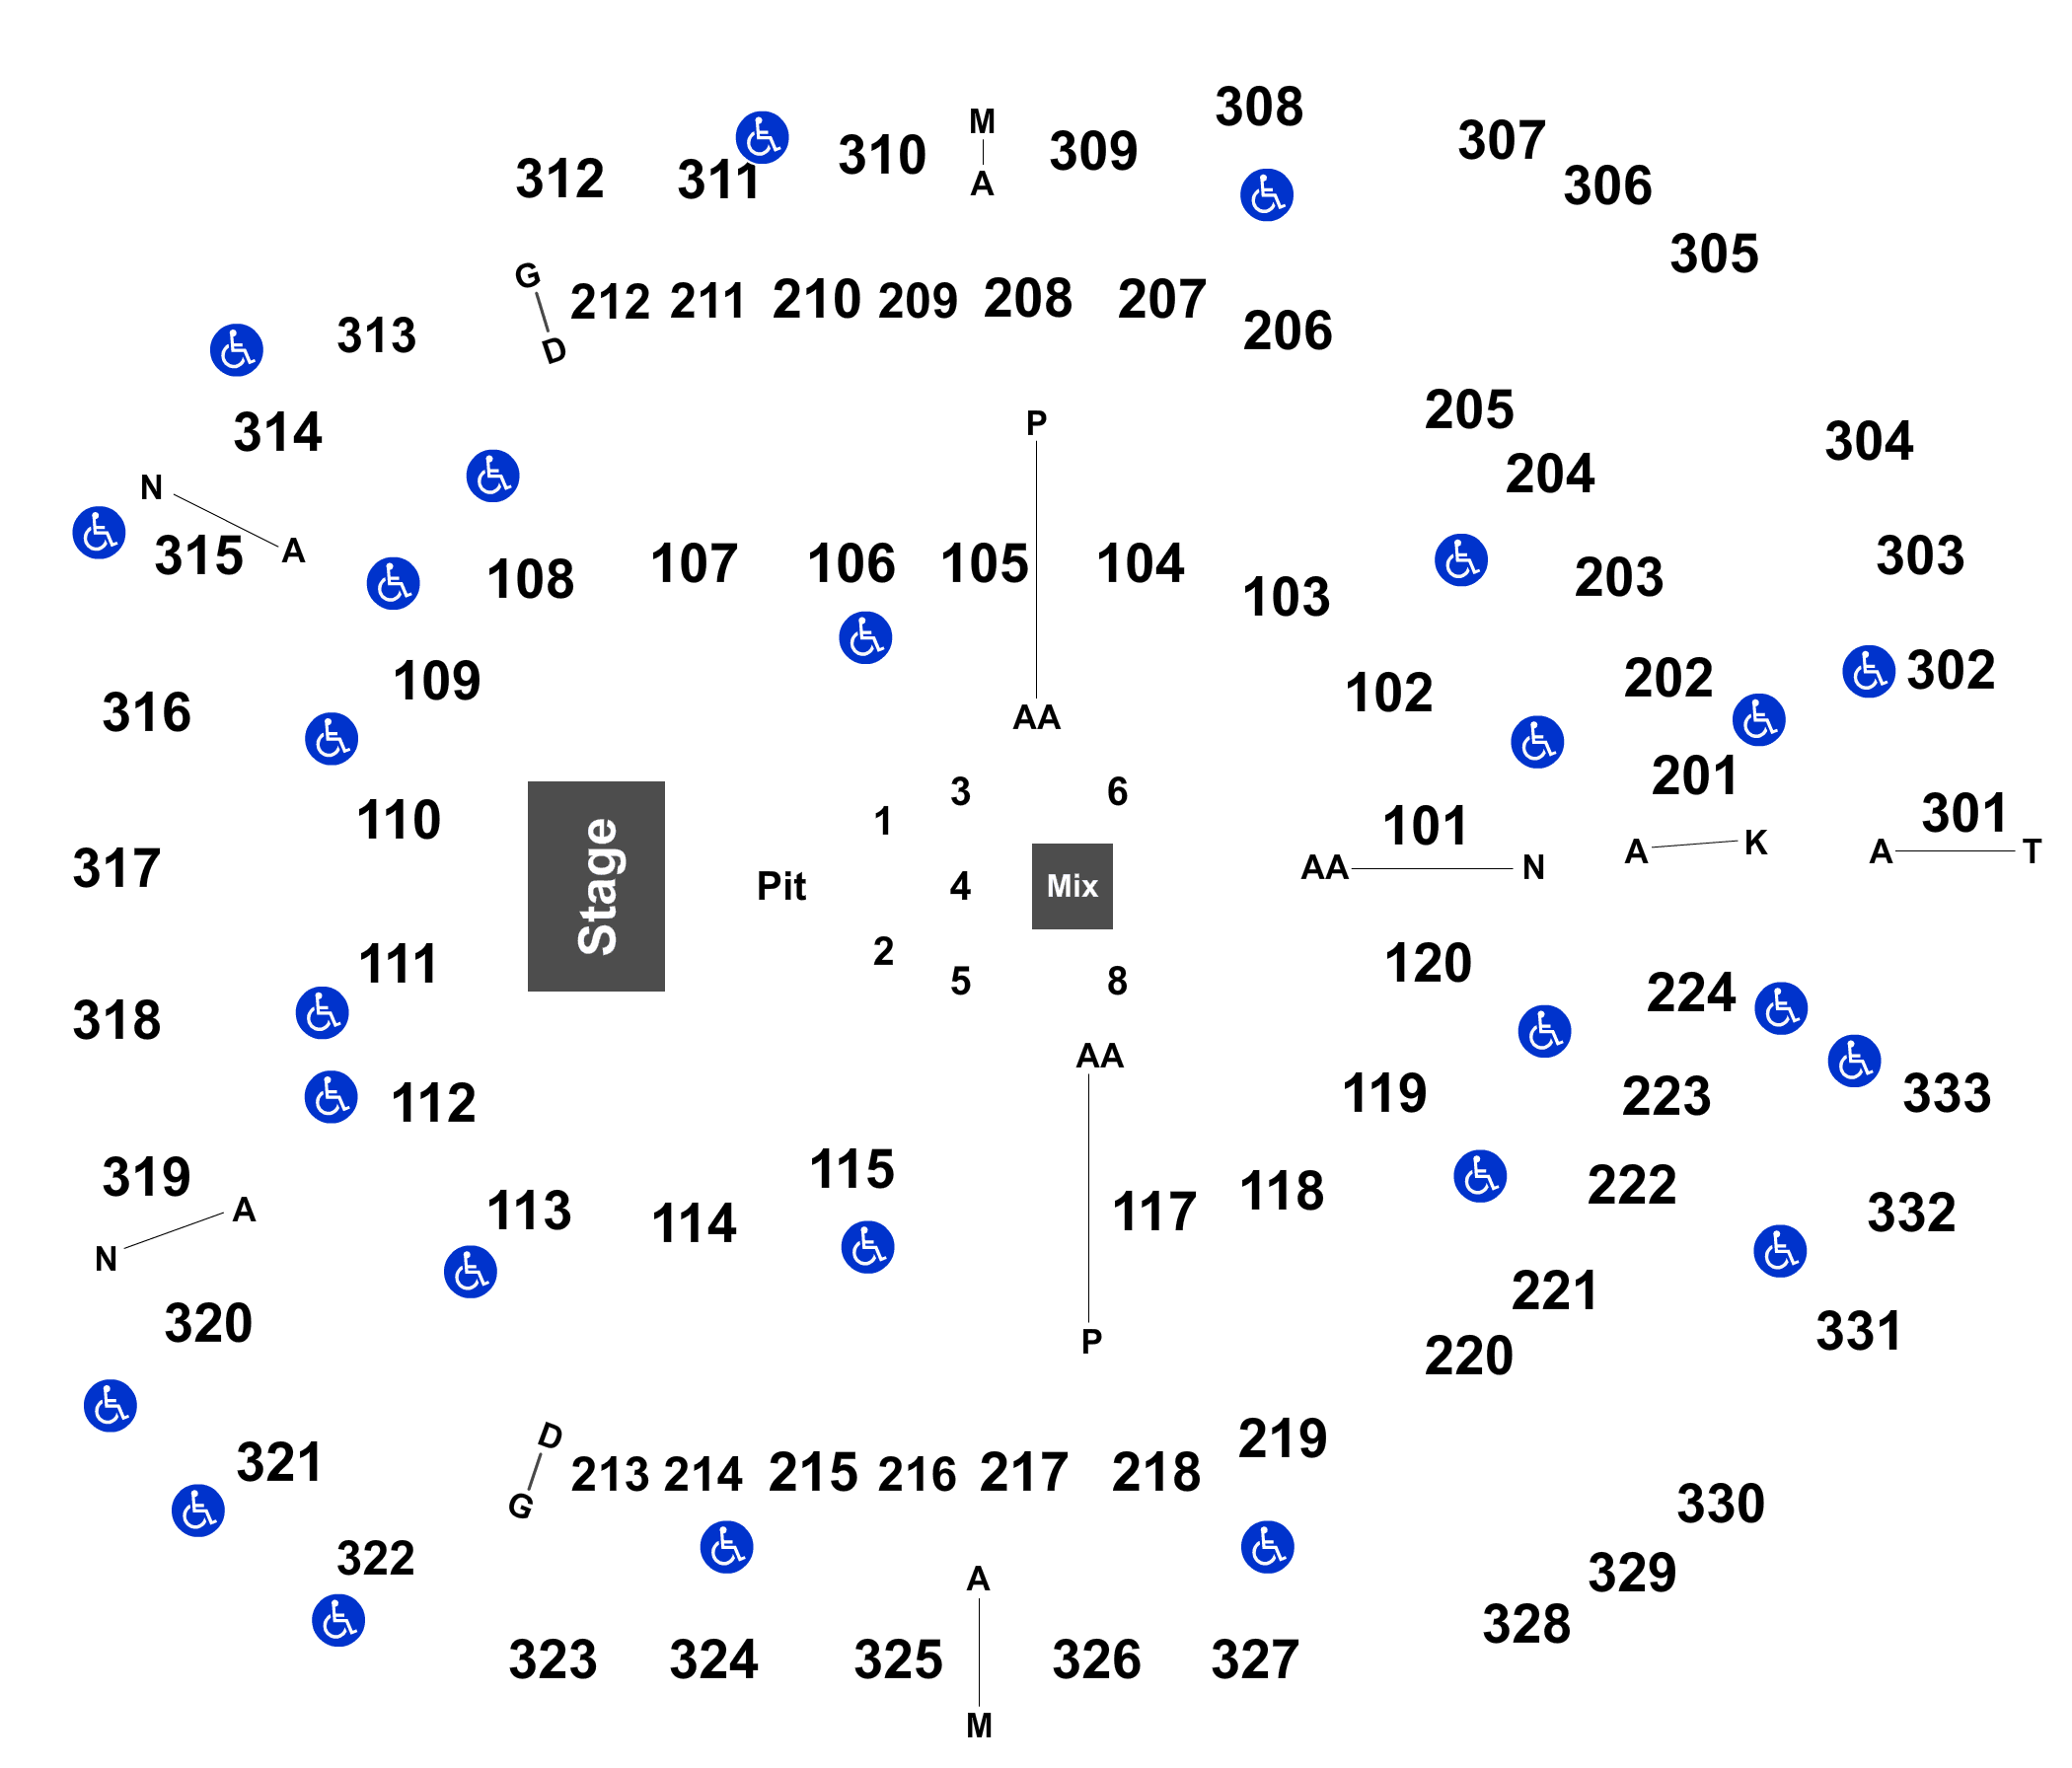 Bridgestone Arena, Nashville TN - Seating Chart View